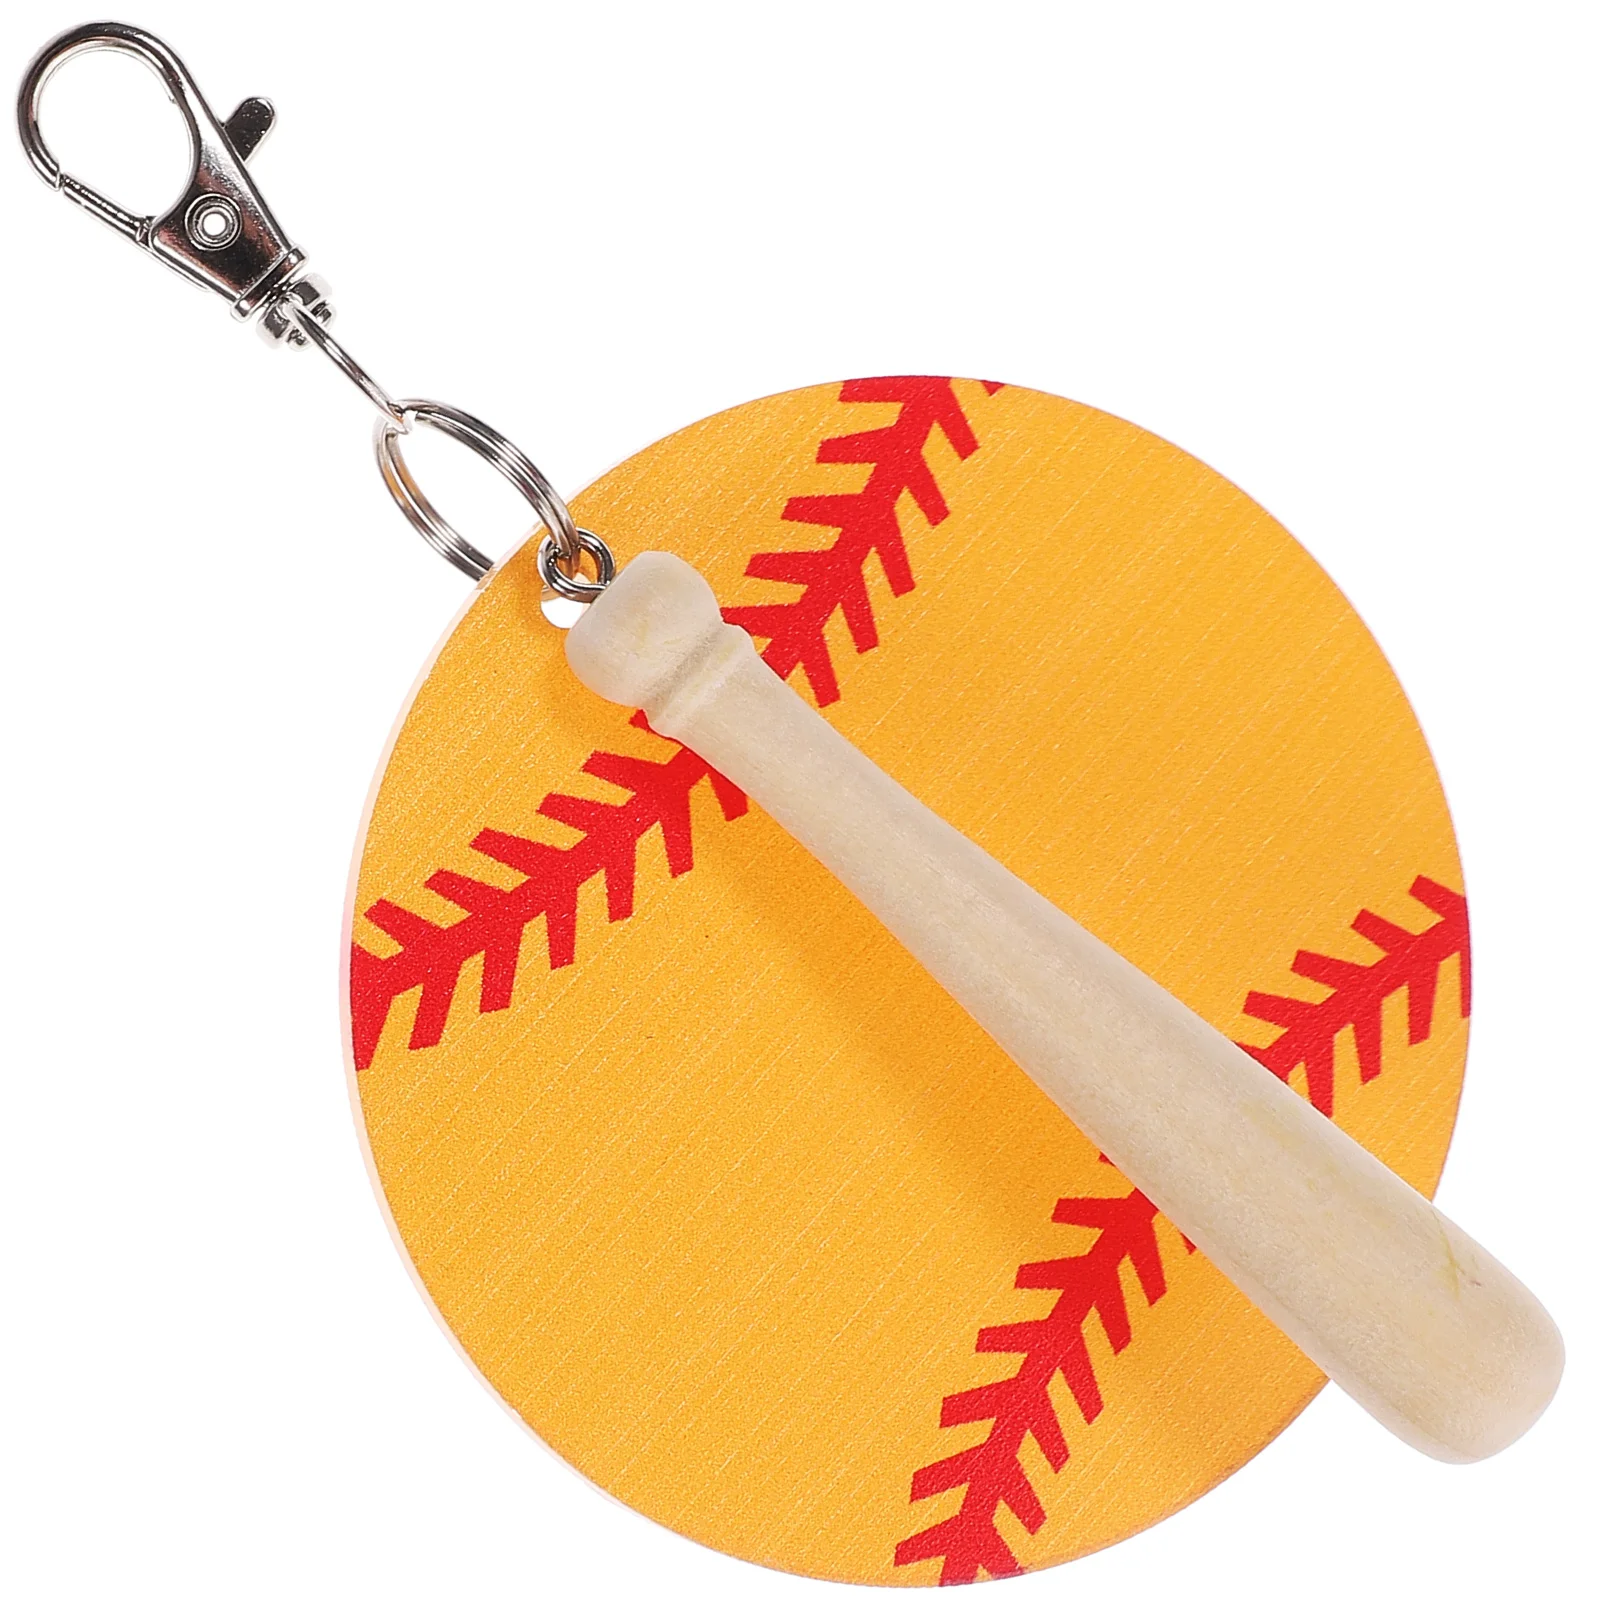 

2 Pcs Softball Keychain Rings Bulk Decorative Baseball Decor Gifts Keychains Ornament Favors